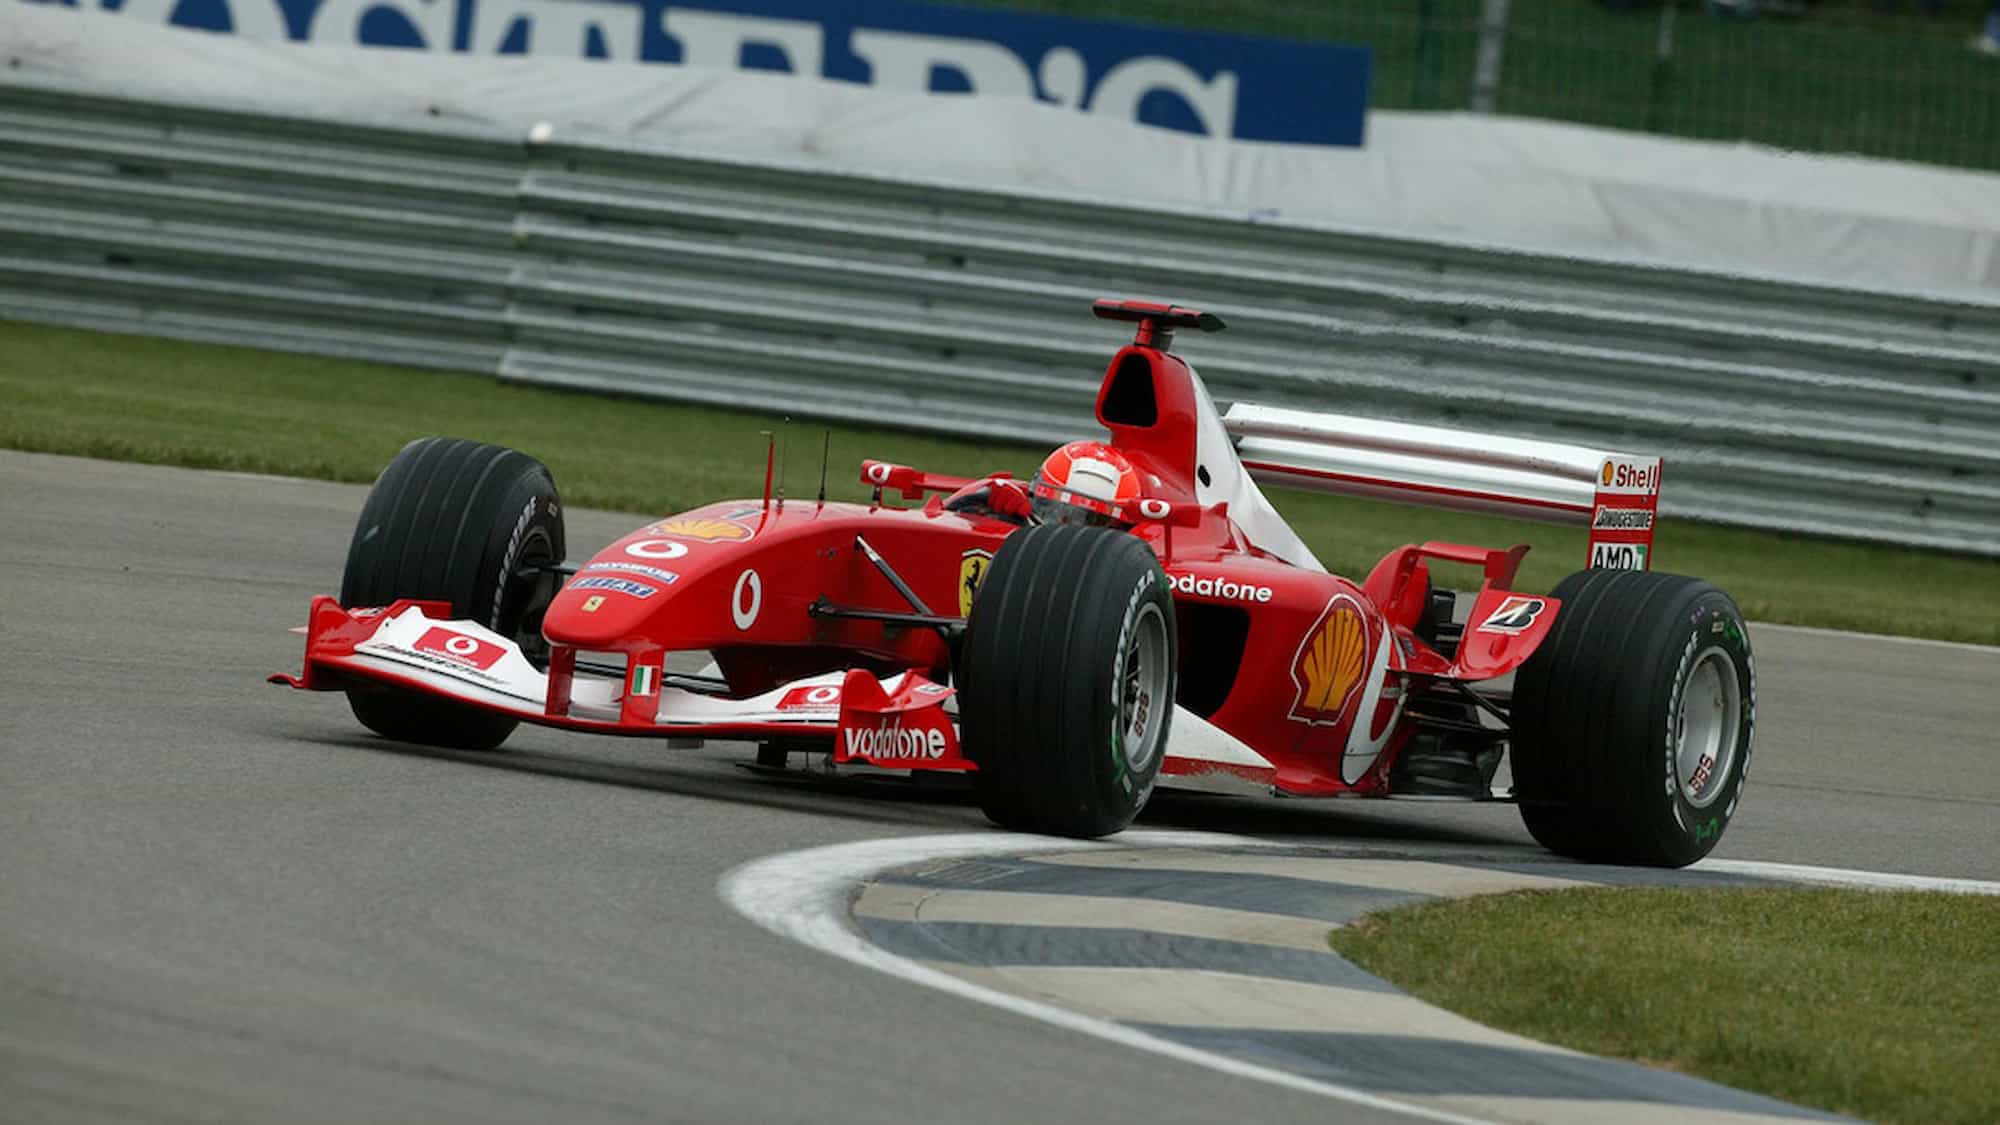 Ferrari F2003-GA